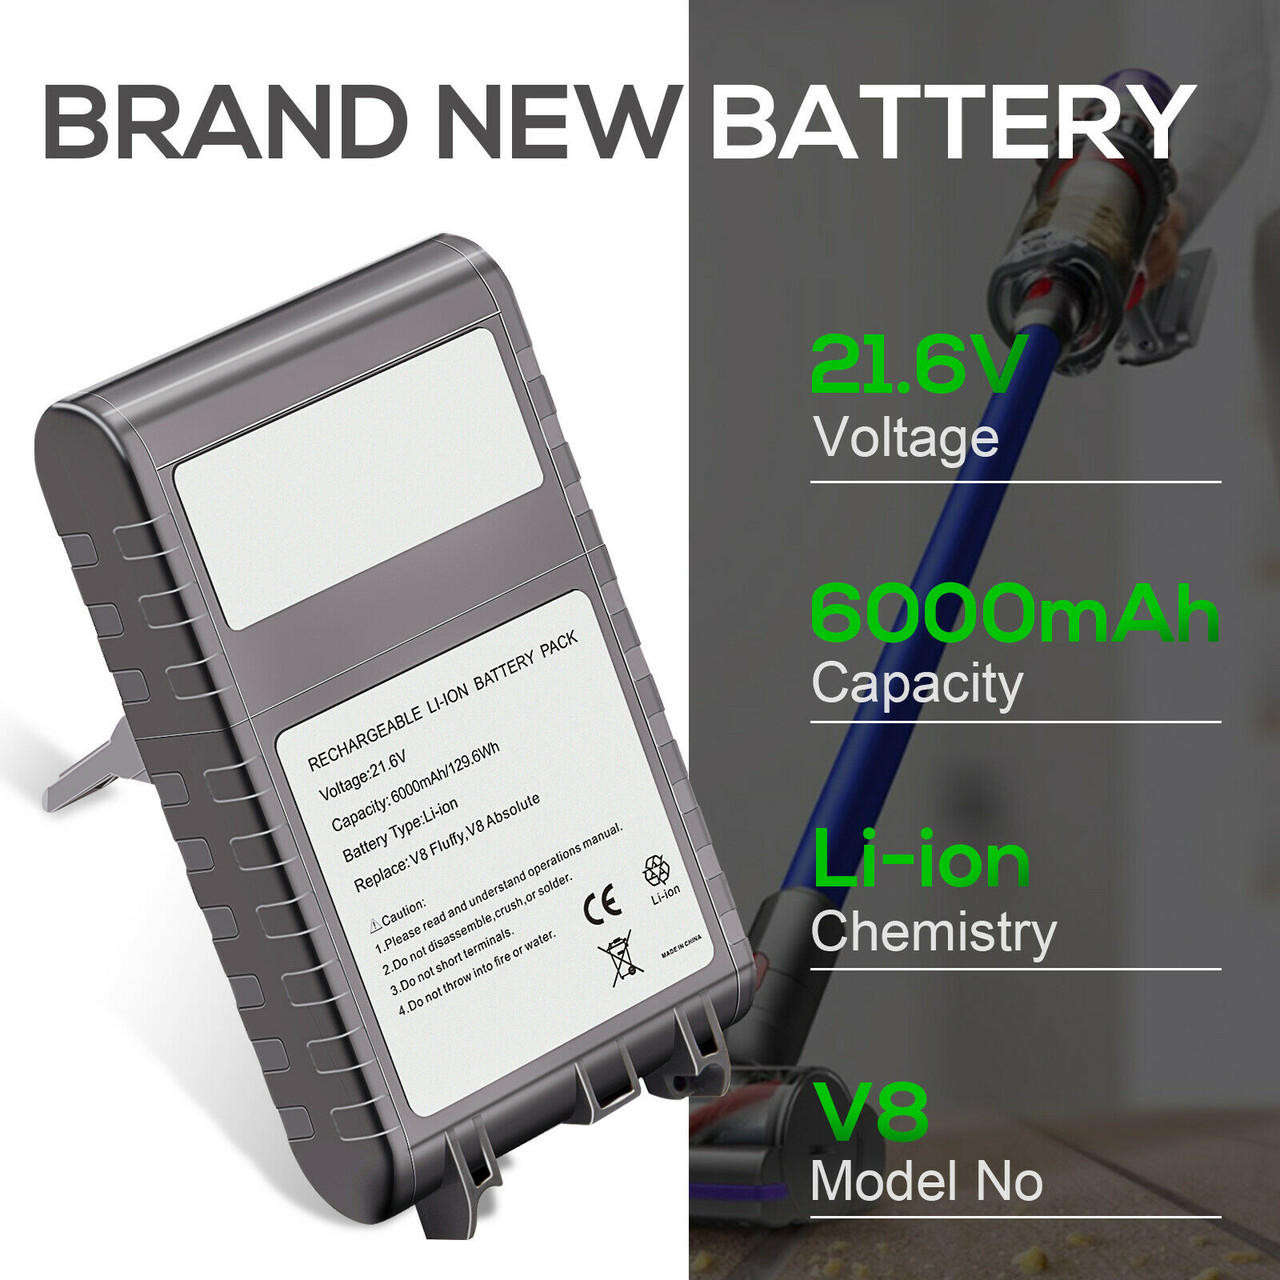 21.6V Lithium Ion Battery For Dyson V6 Animal V7 V8 Absolute HEPA Vacuum  Cleaner - Redstag Supplies